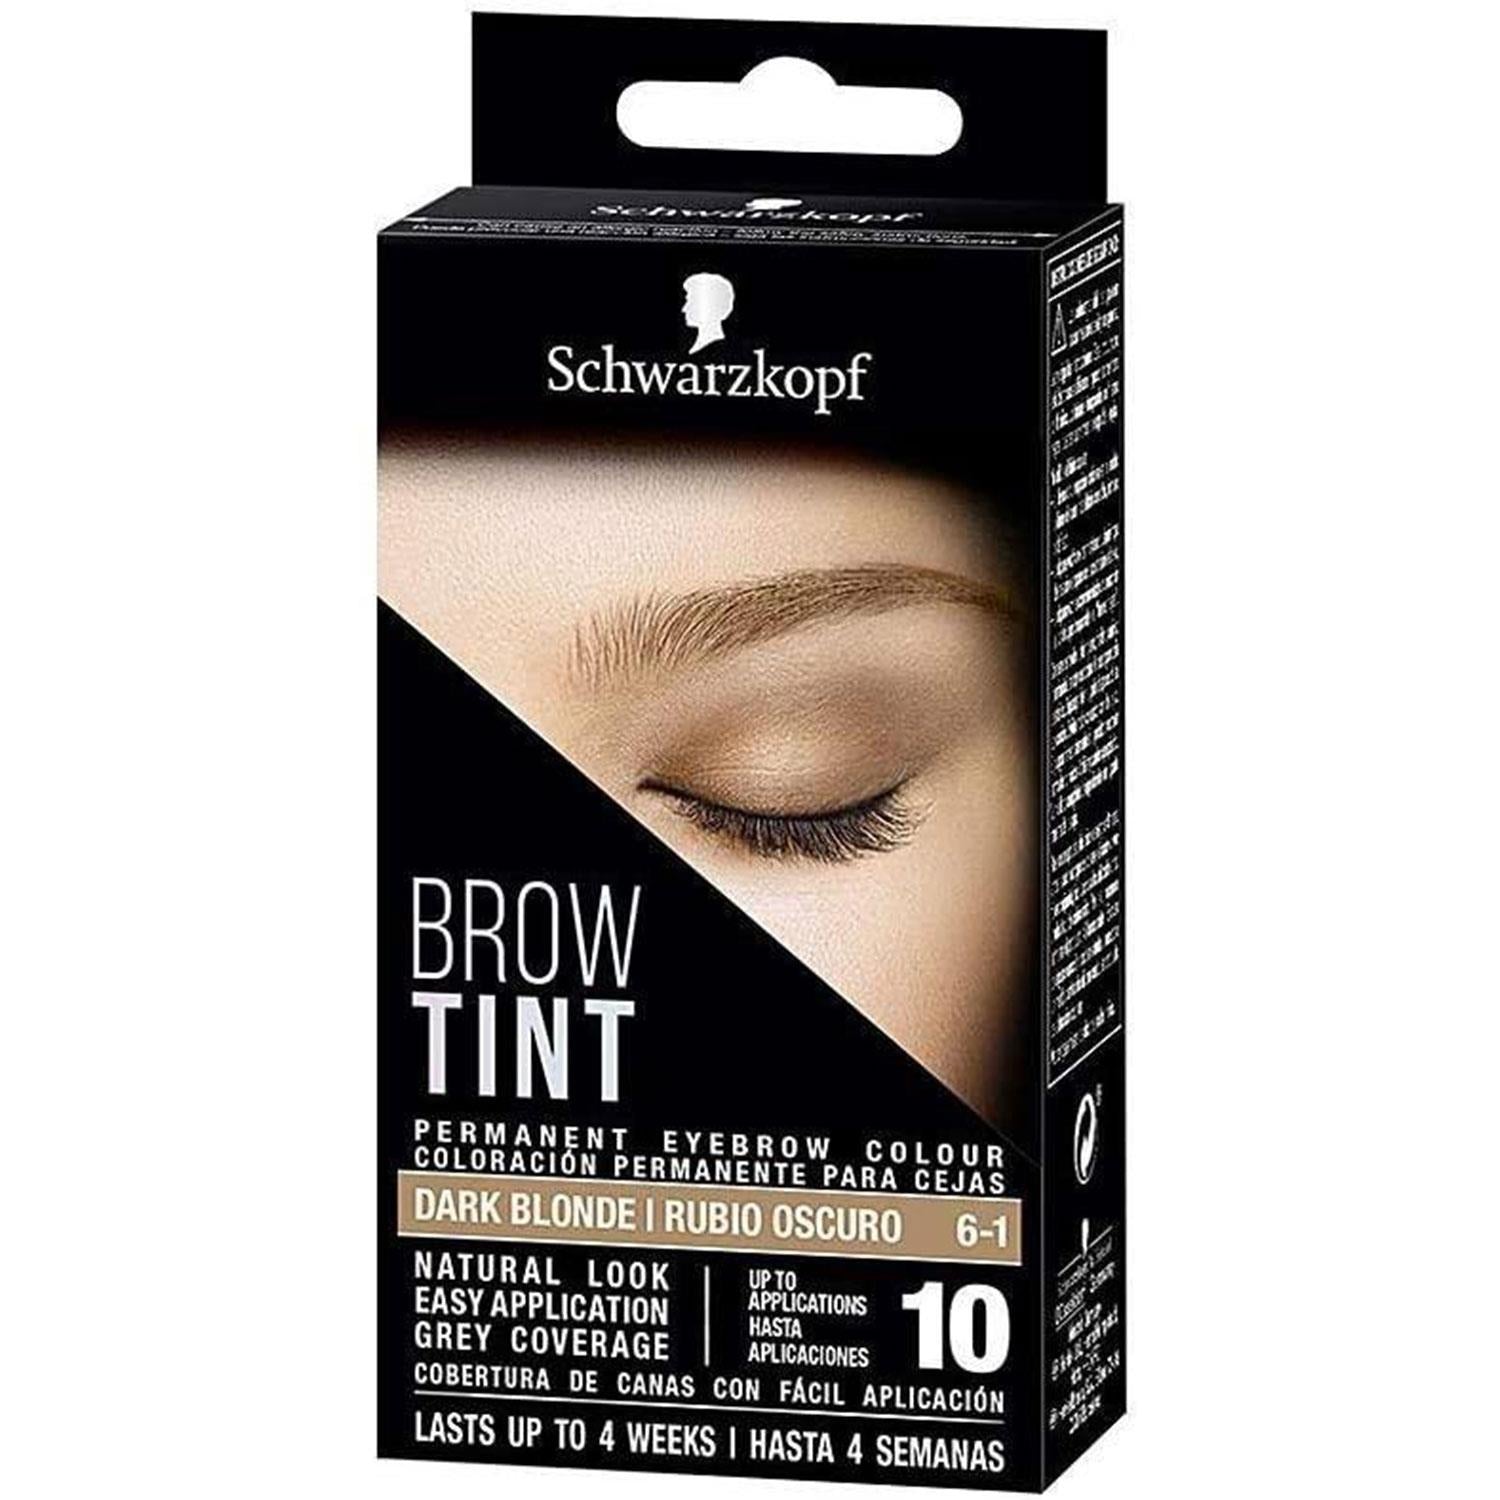 Schwarzkopf Brow Tint Kit Professional Formula Permanent Eyebrow 6-1 Dark Blonde